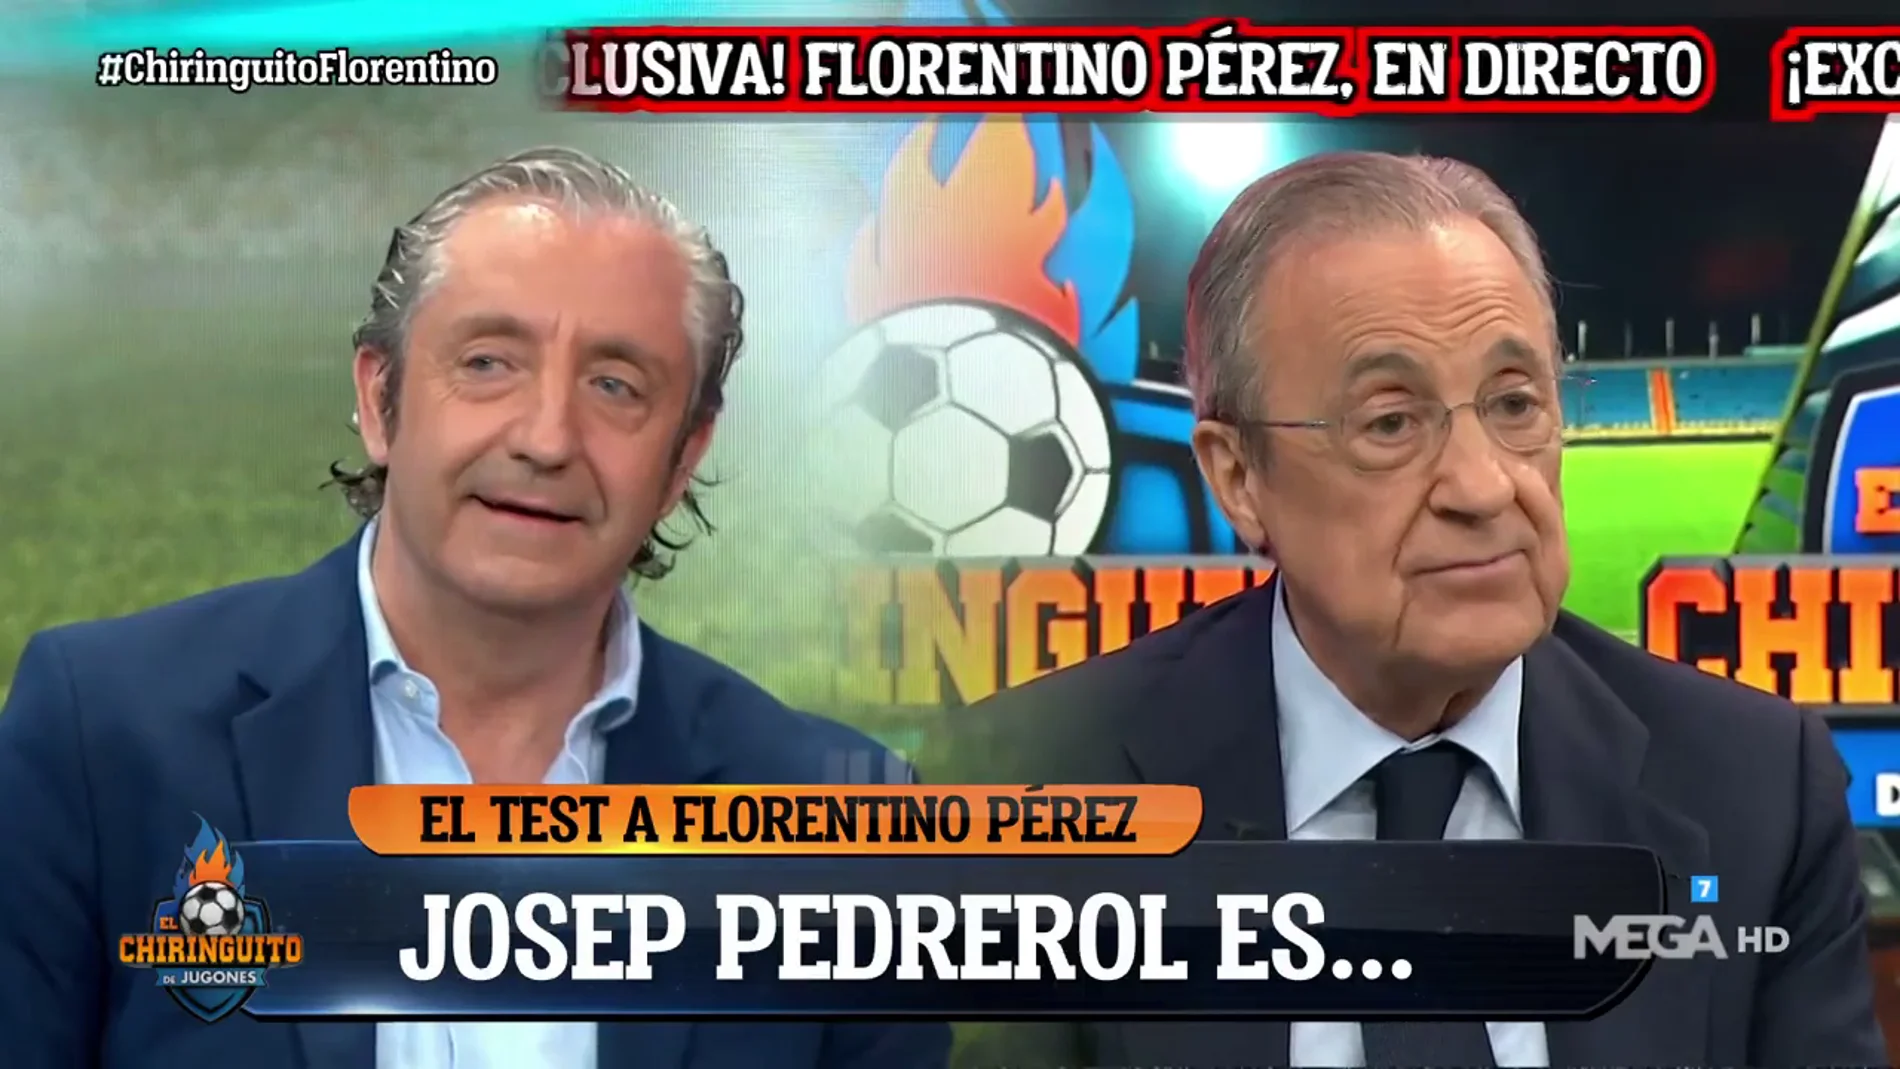 Florentino Pérez: "Josep Pedrerol es un crack"